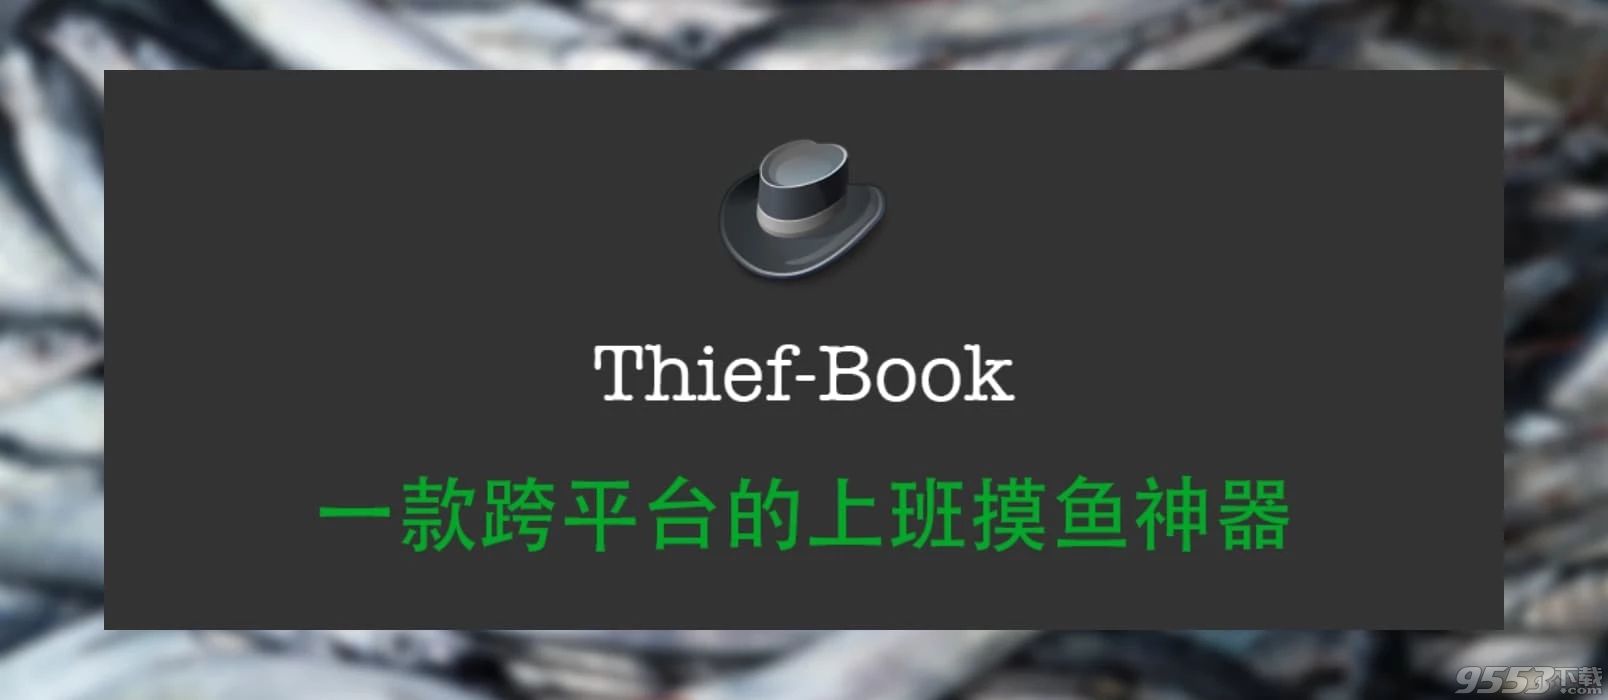 Thief book v3.0 最新版